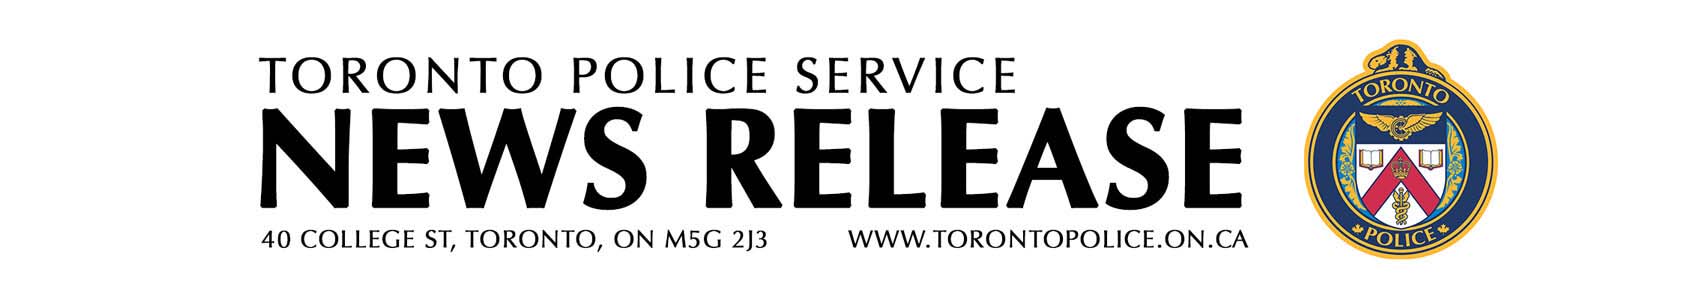 Toronto Police Service News Release. Address: 40 College Street, Toronto, Ontario, M5G 2J3. Website: www.torontopolice.on.ca. 